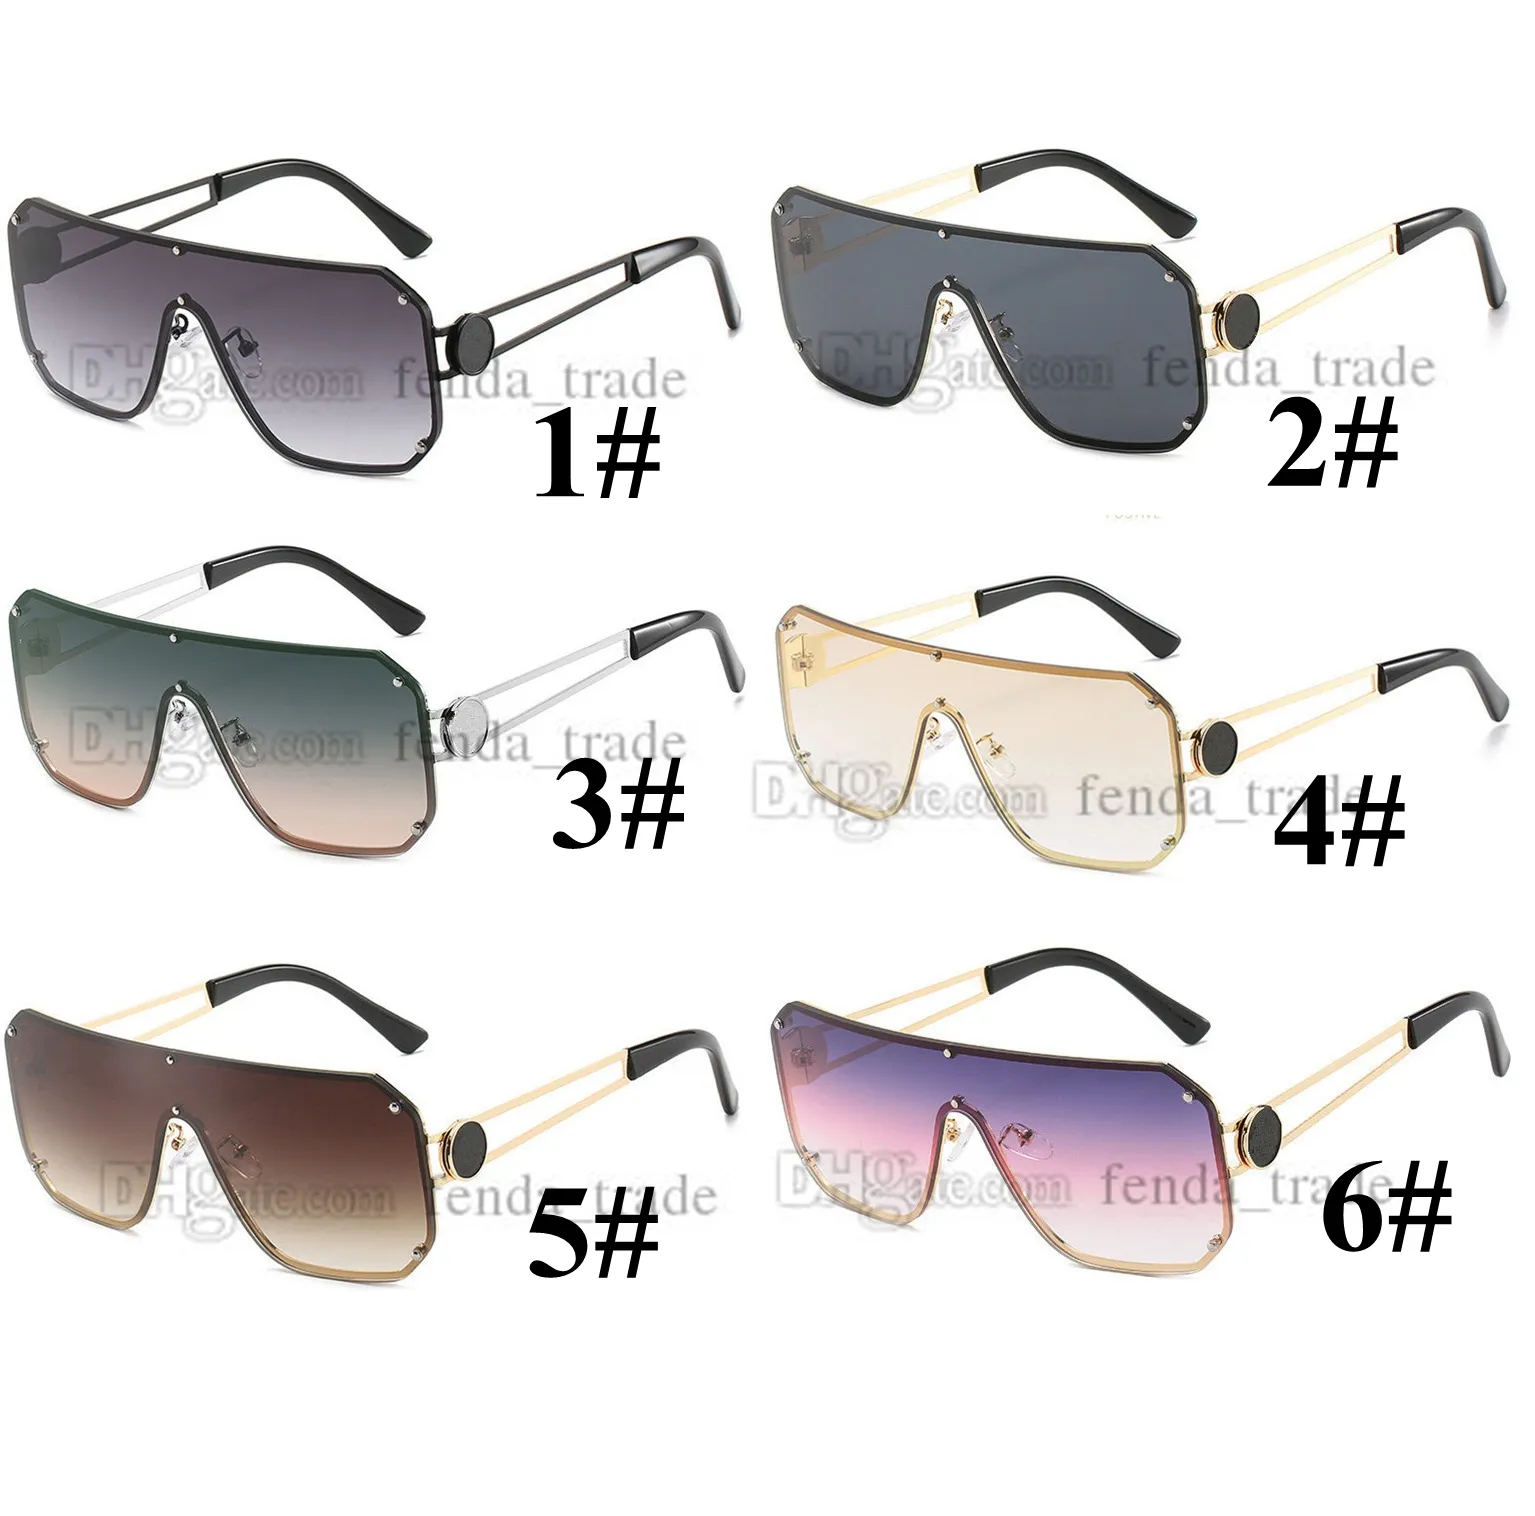 Factory Price New Square Sunglasses Women Big Frame Glasses With Metal Decoration Fashion Ladies Sun Glasses UV400 6 colors 10PCS fast ship